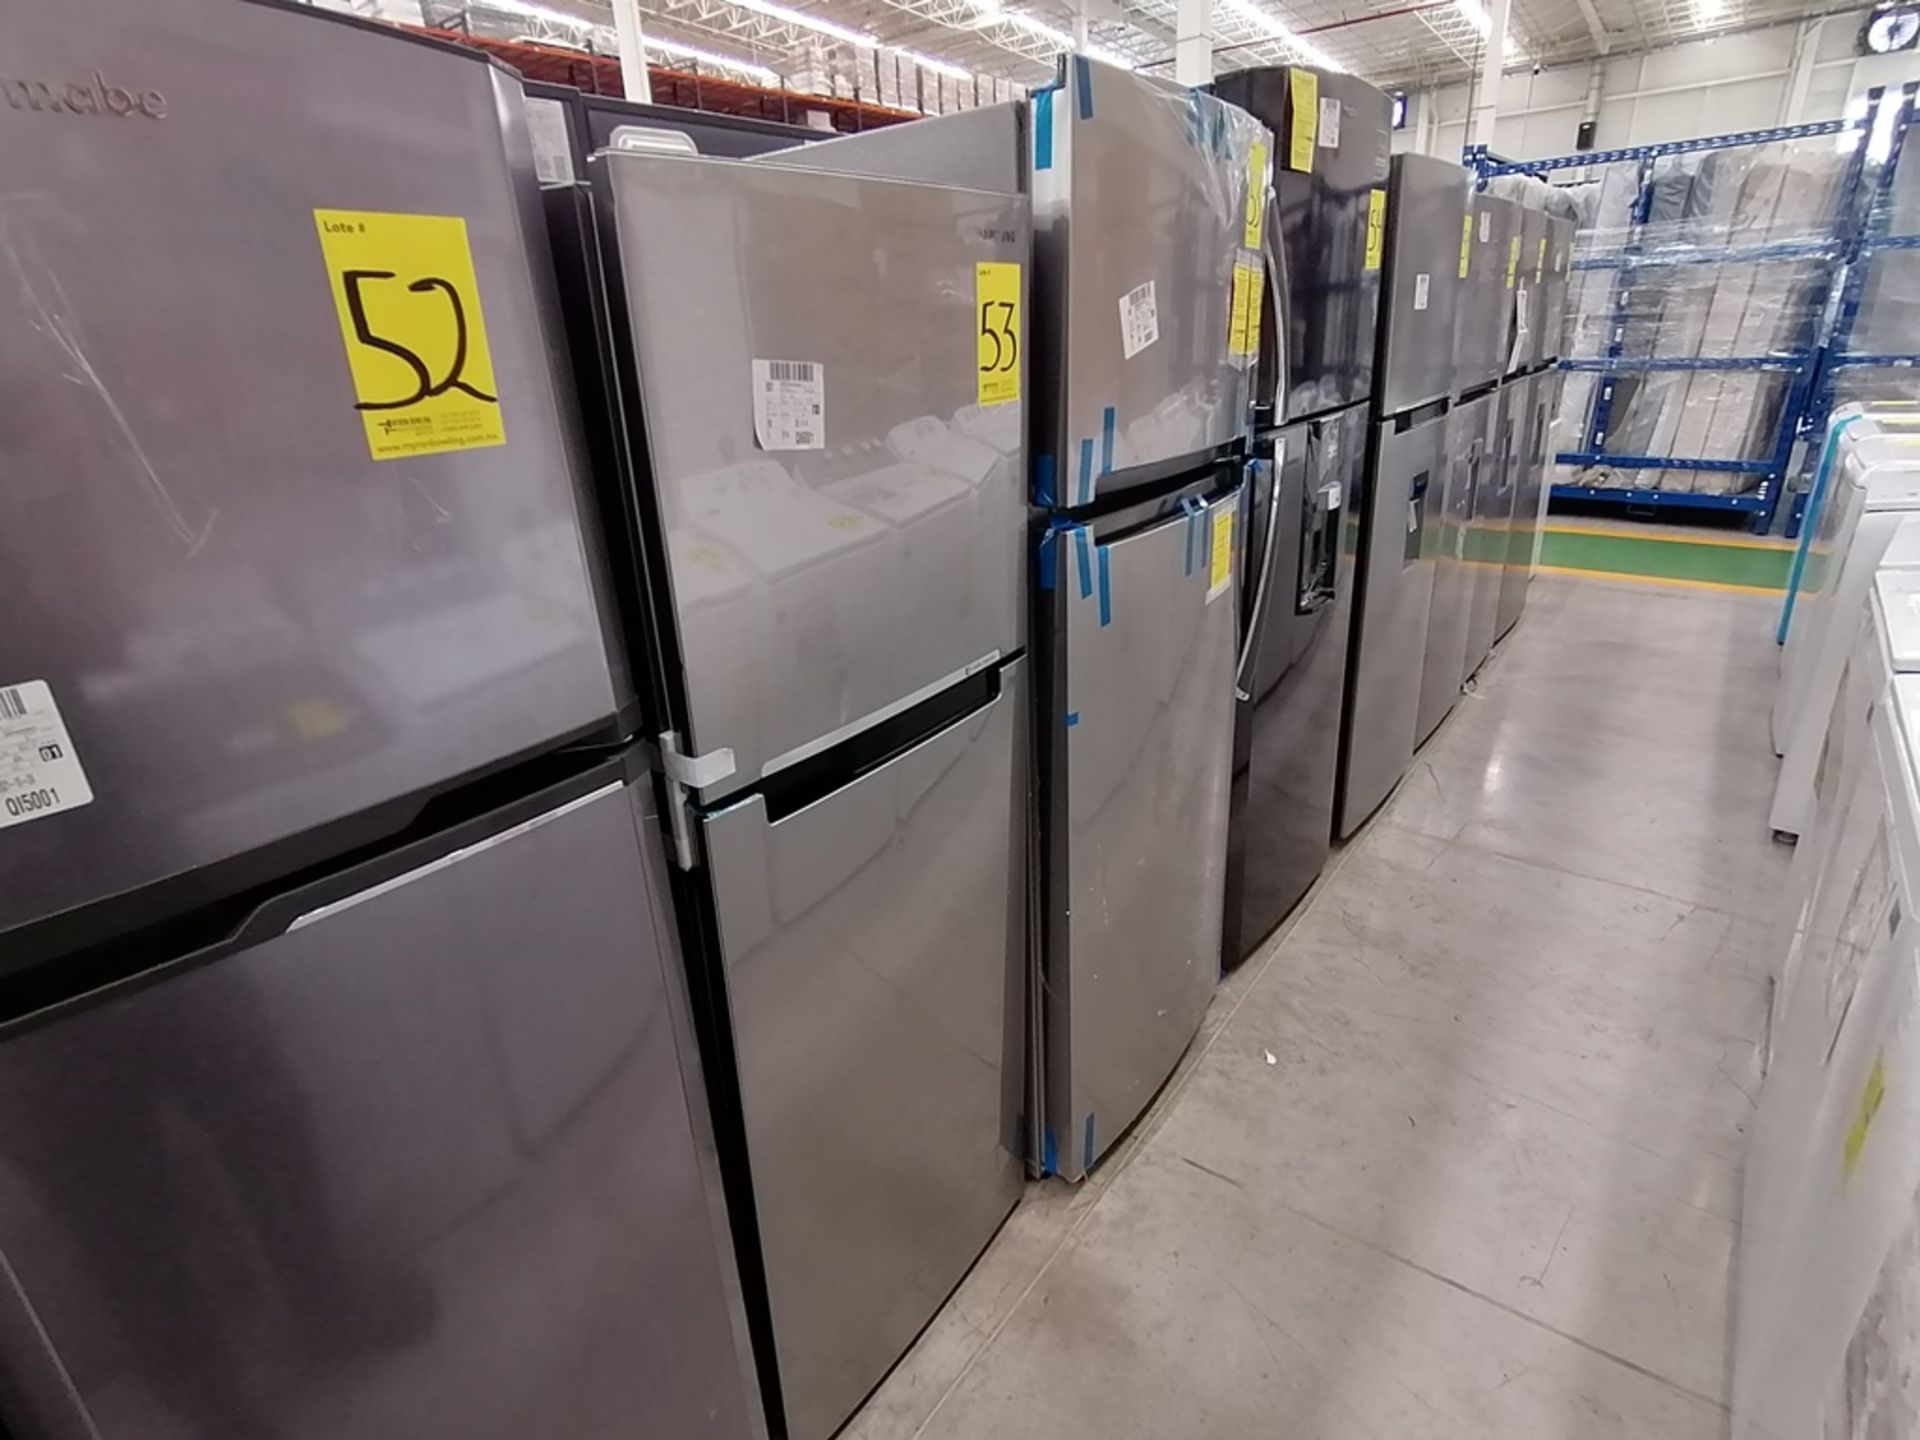 Lote de 2 refrigeradores incluye: 1 Refrigerador, Marca Samsung, Modelo RT29K500JS8, Serie 0AZS4BAR - Image 2 of 15